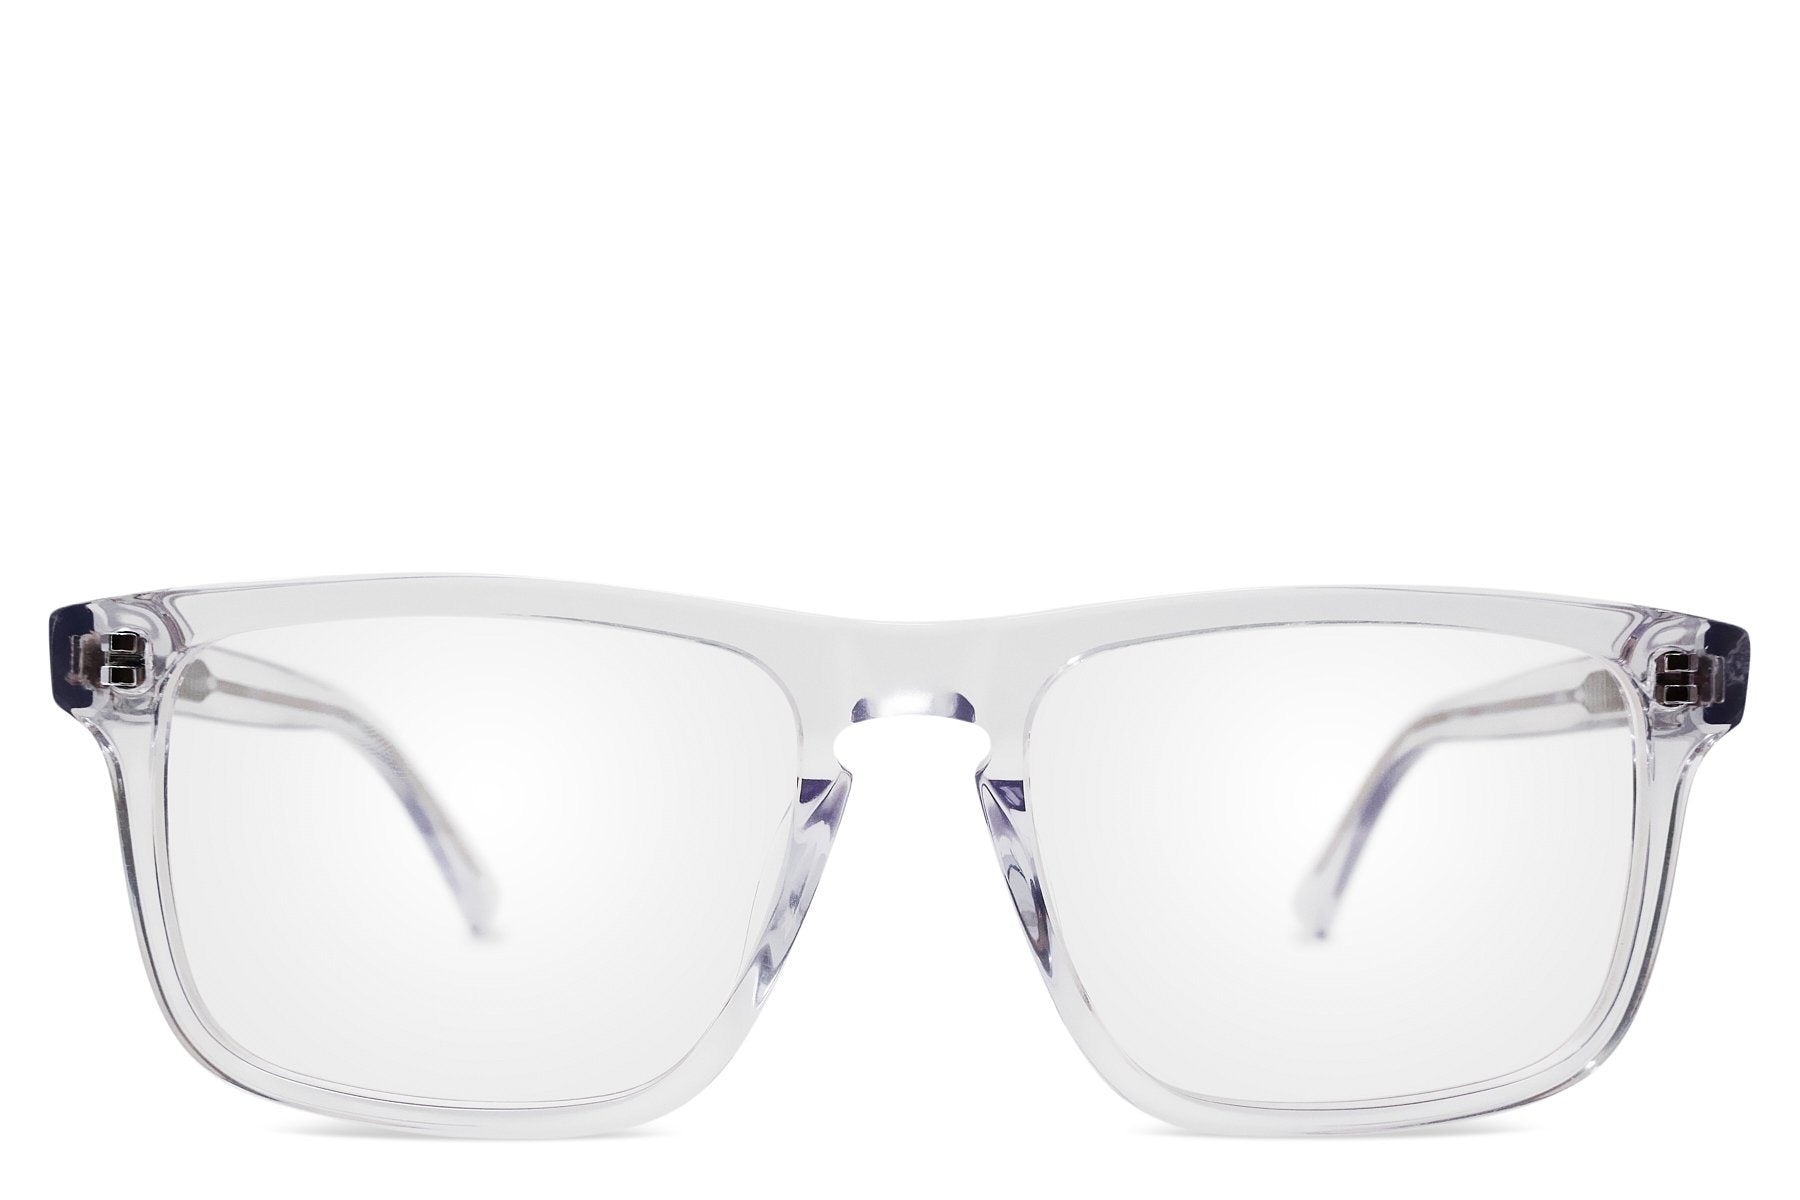 Product Review: Shady Rays Polarized Sunglasses